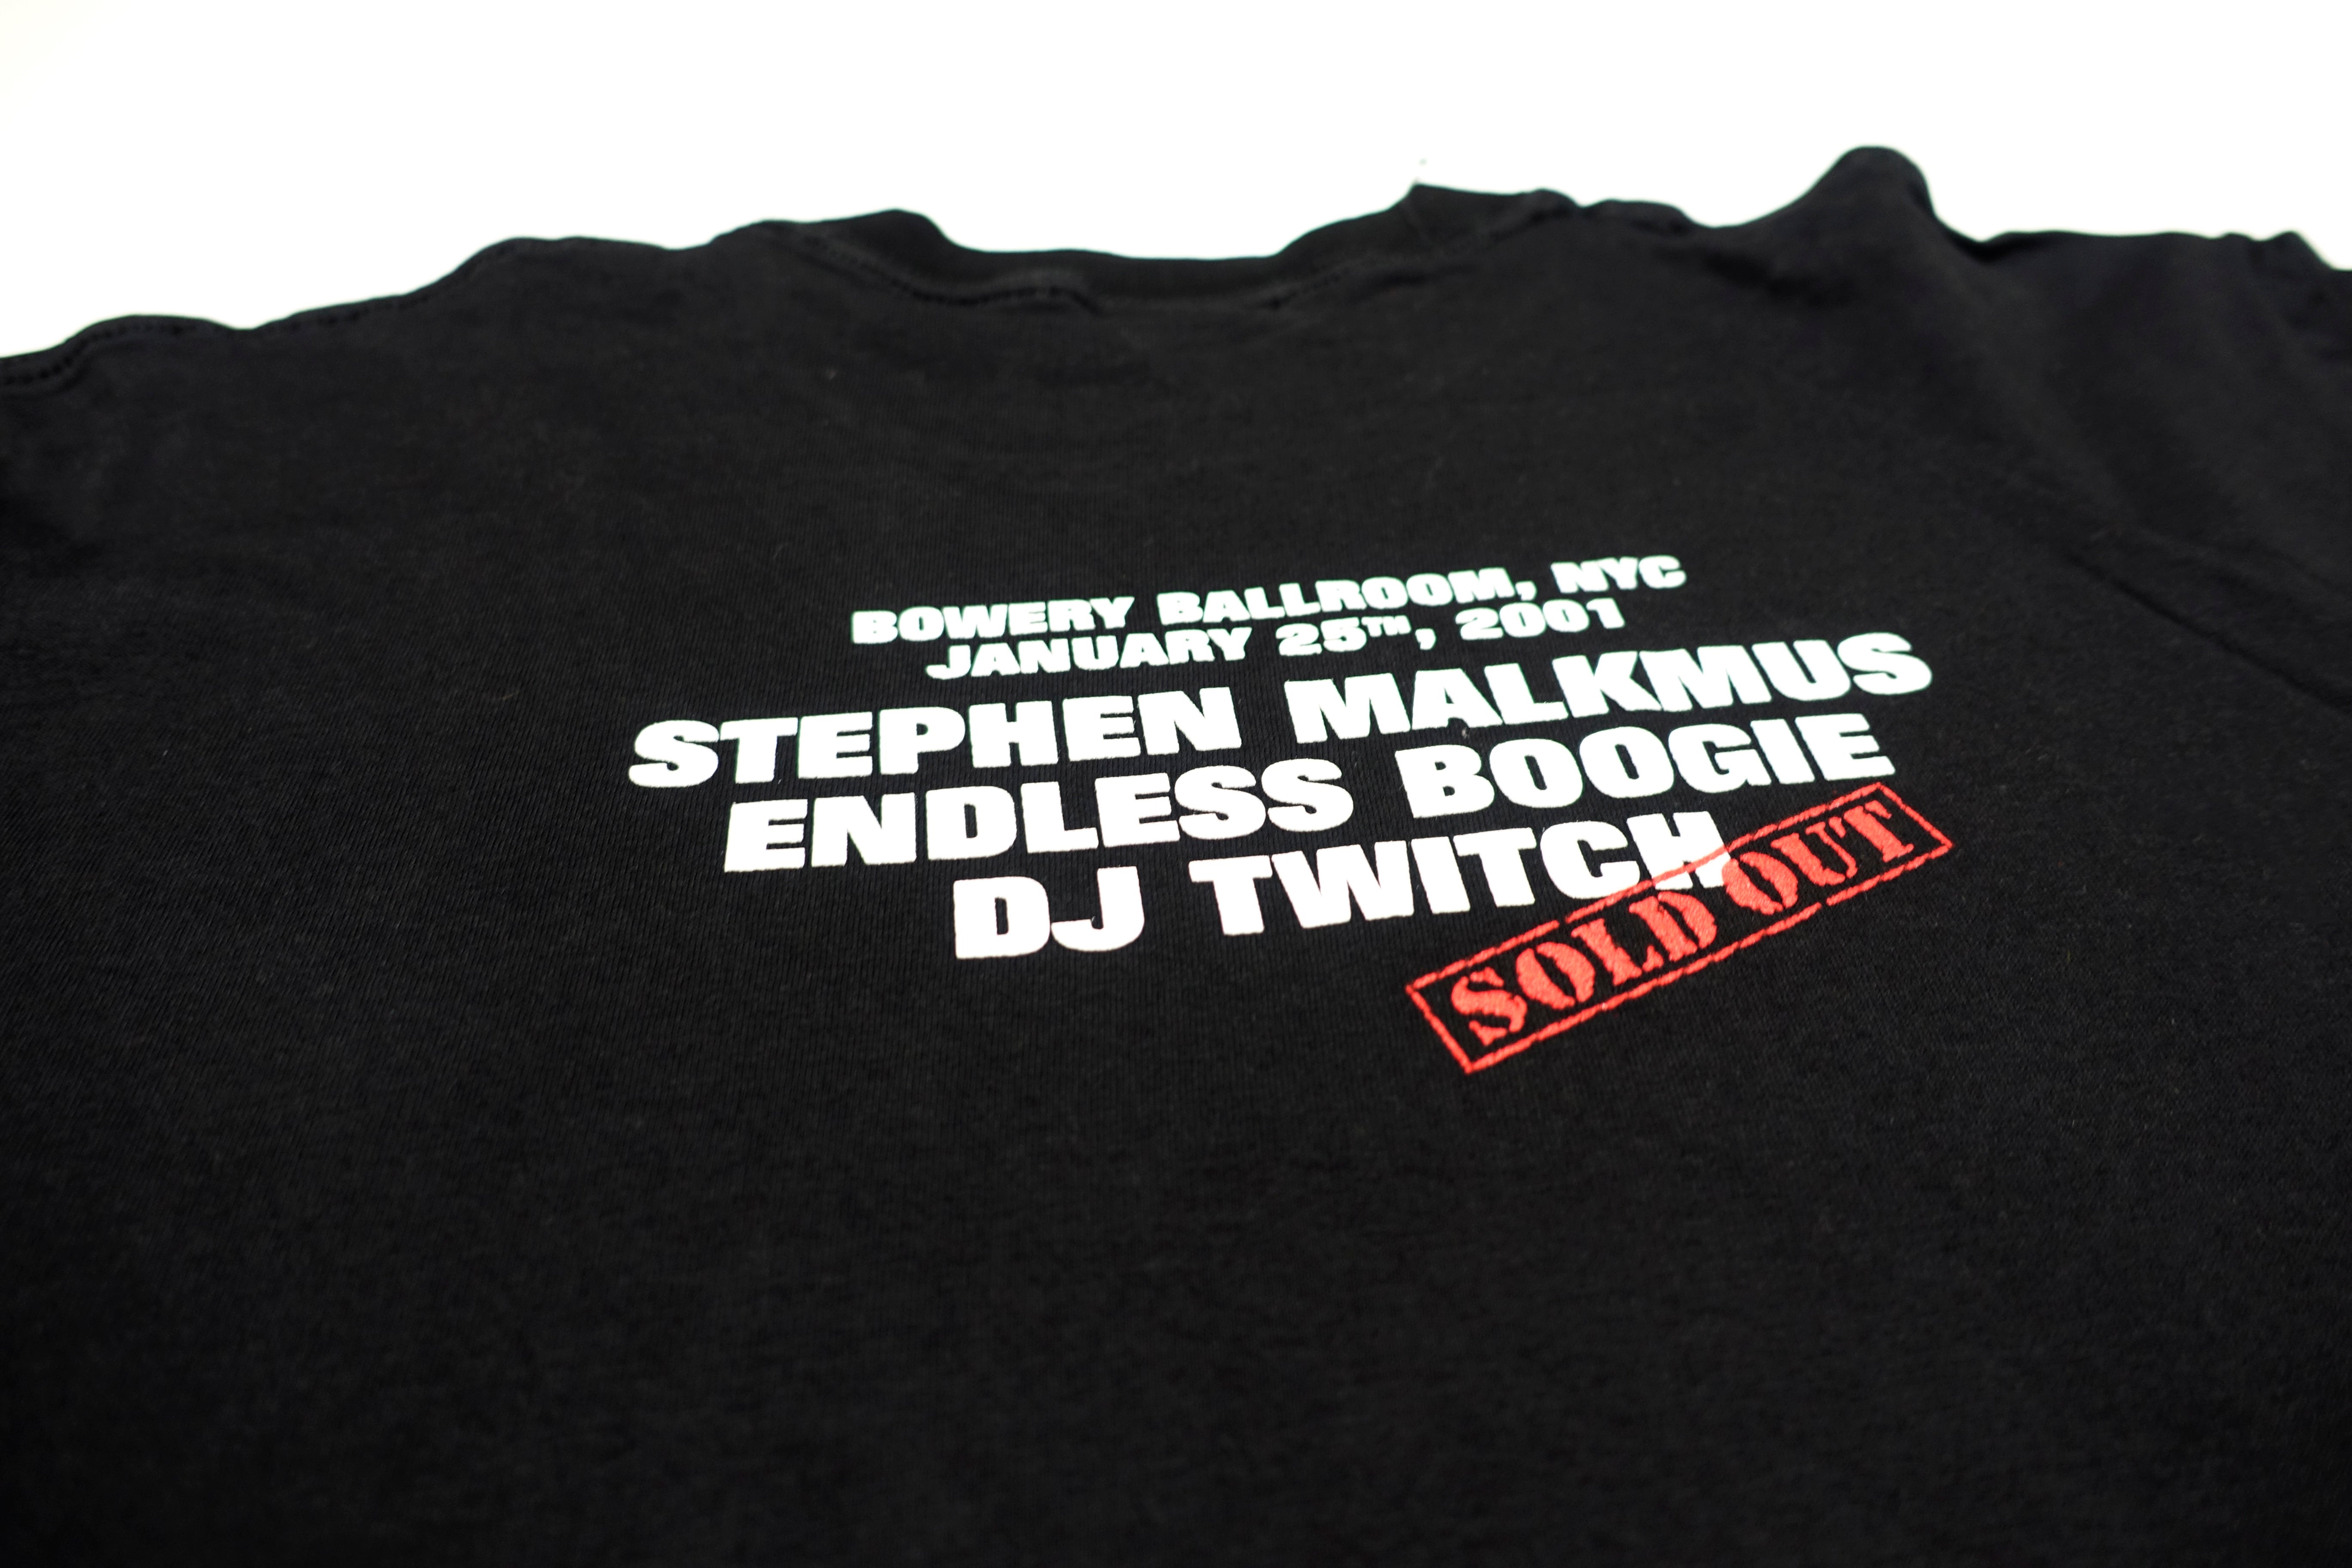 Stephen Malkmus - Who The Fuck Is Stephen Malkmus? 2001 Tour Shirt Size Large